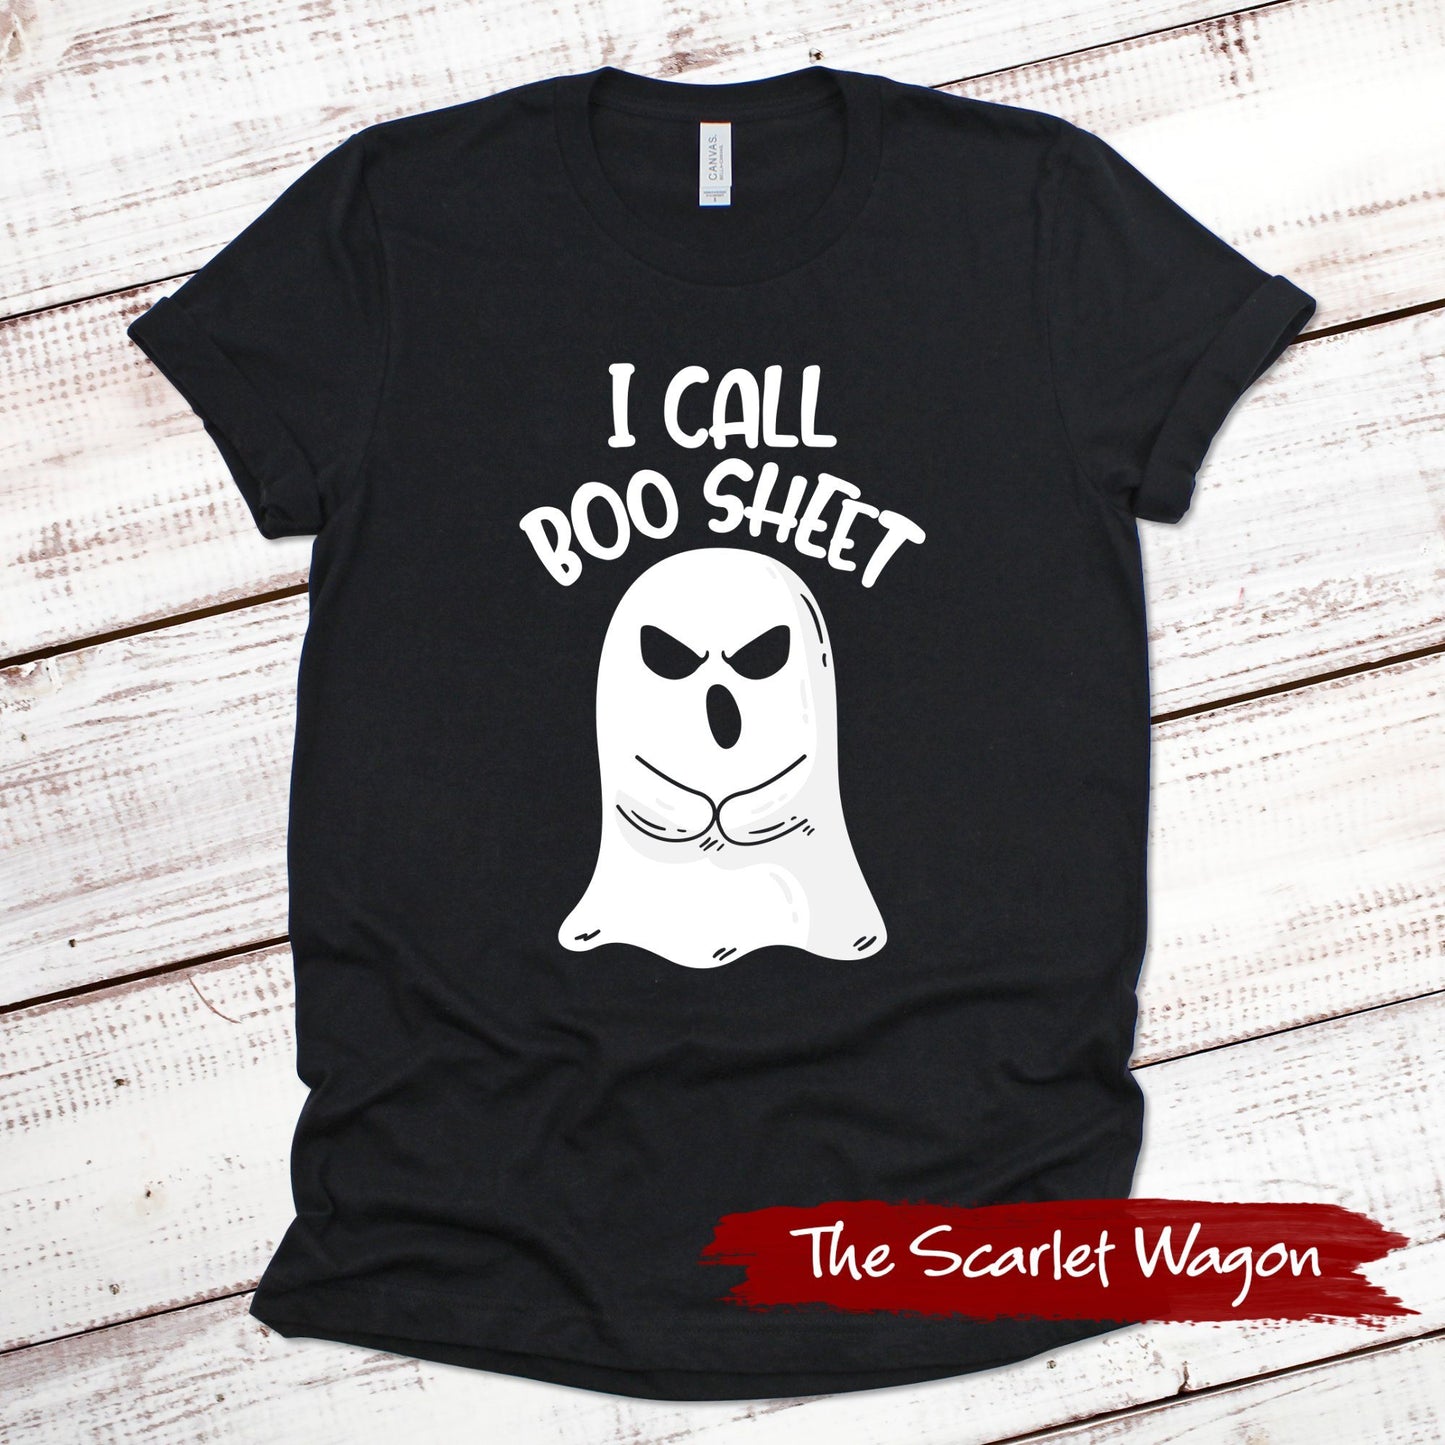 I Call Boo Sheet Halloween Shirt Scarlet Wagon Black XS 